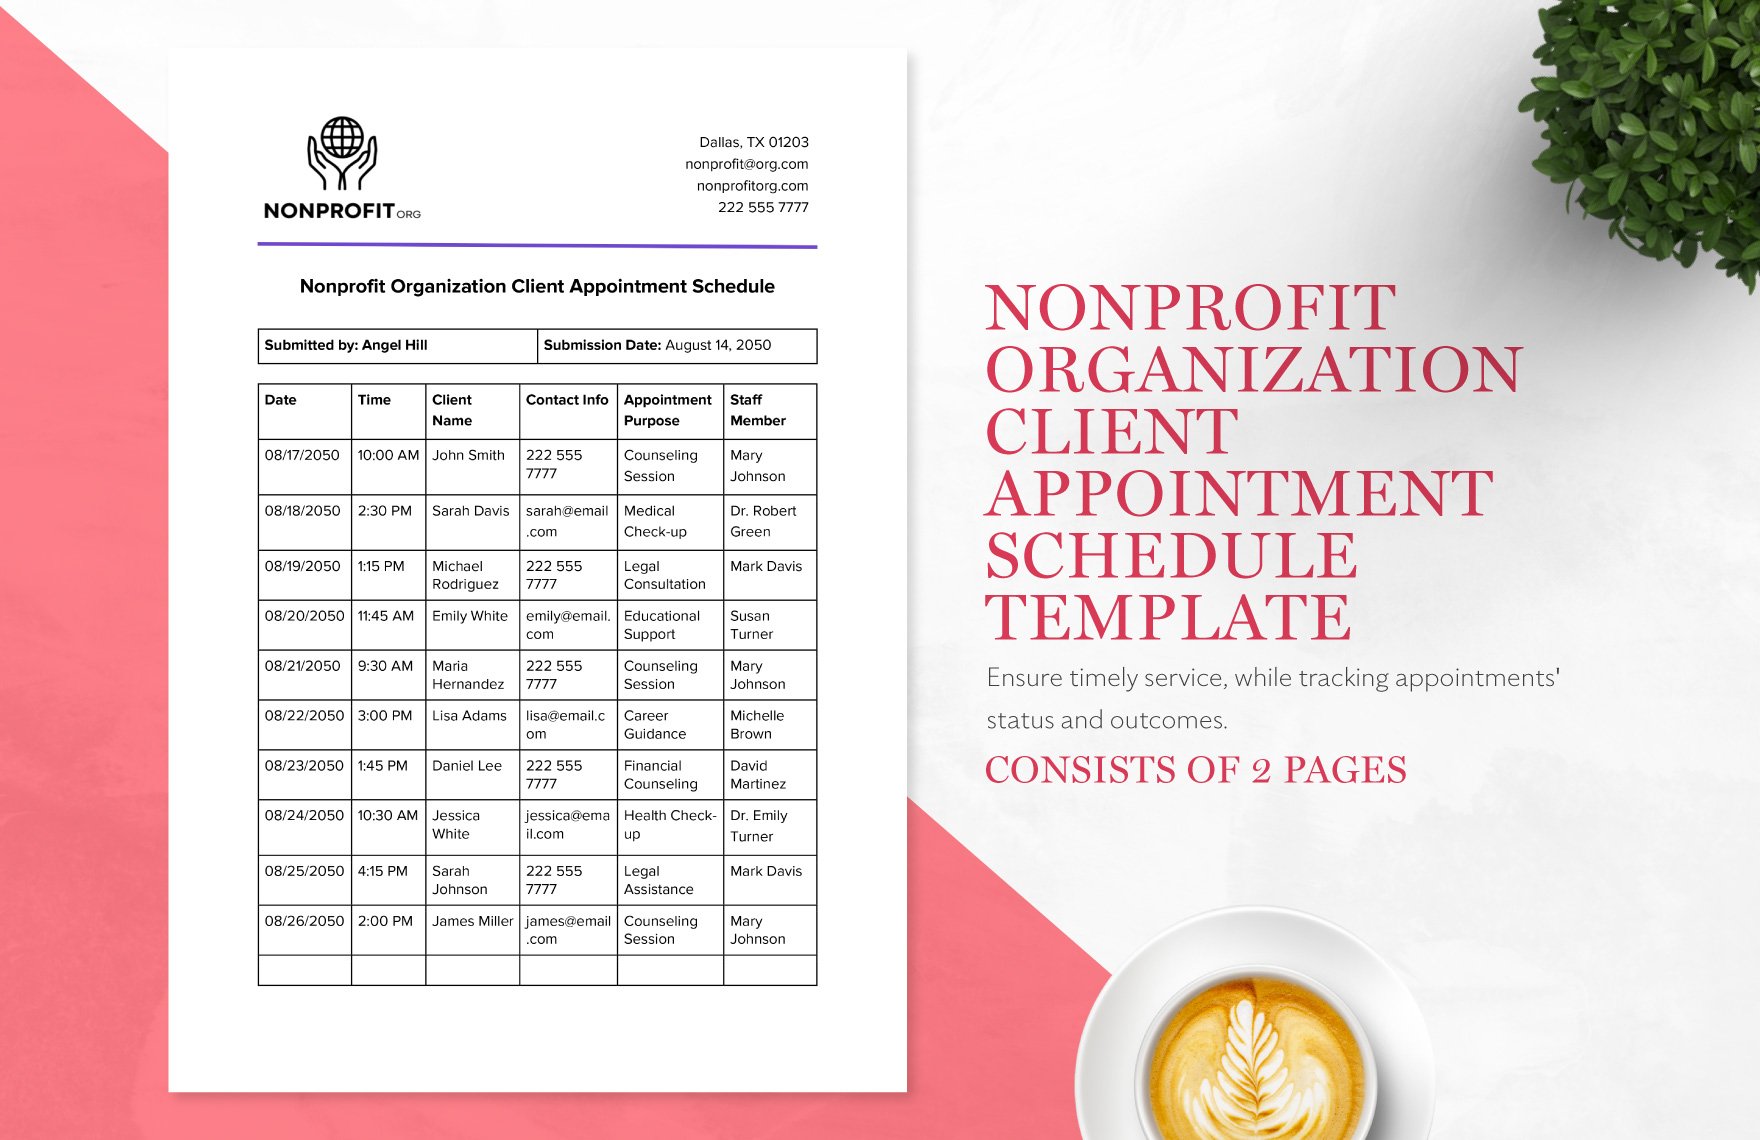 Nonprofit Organization Client Appointment Schedule Template